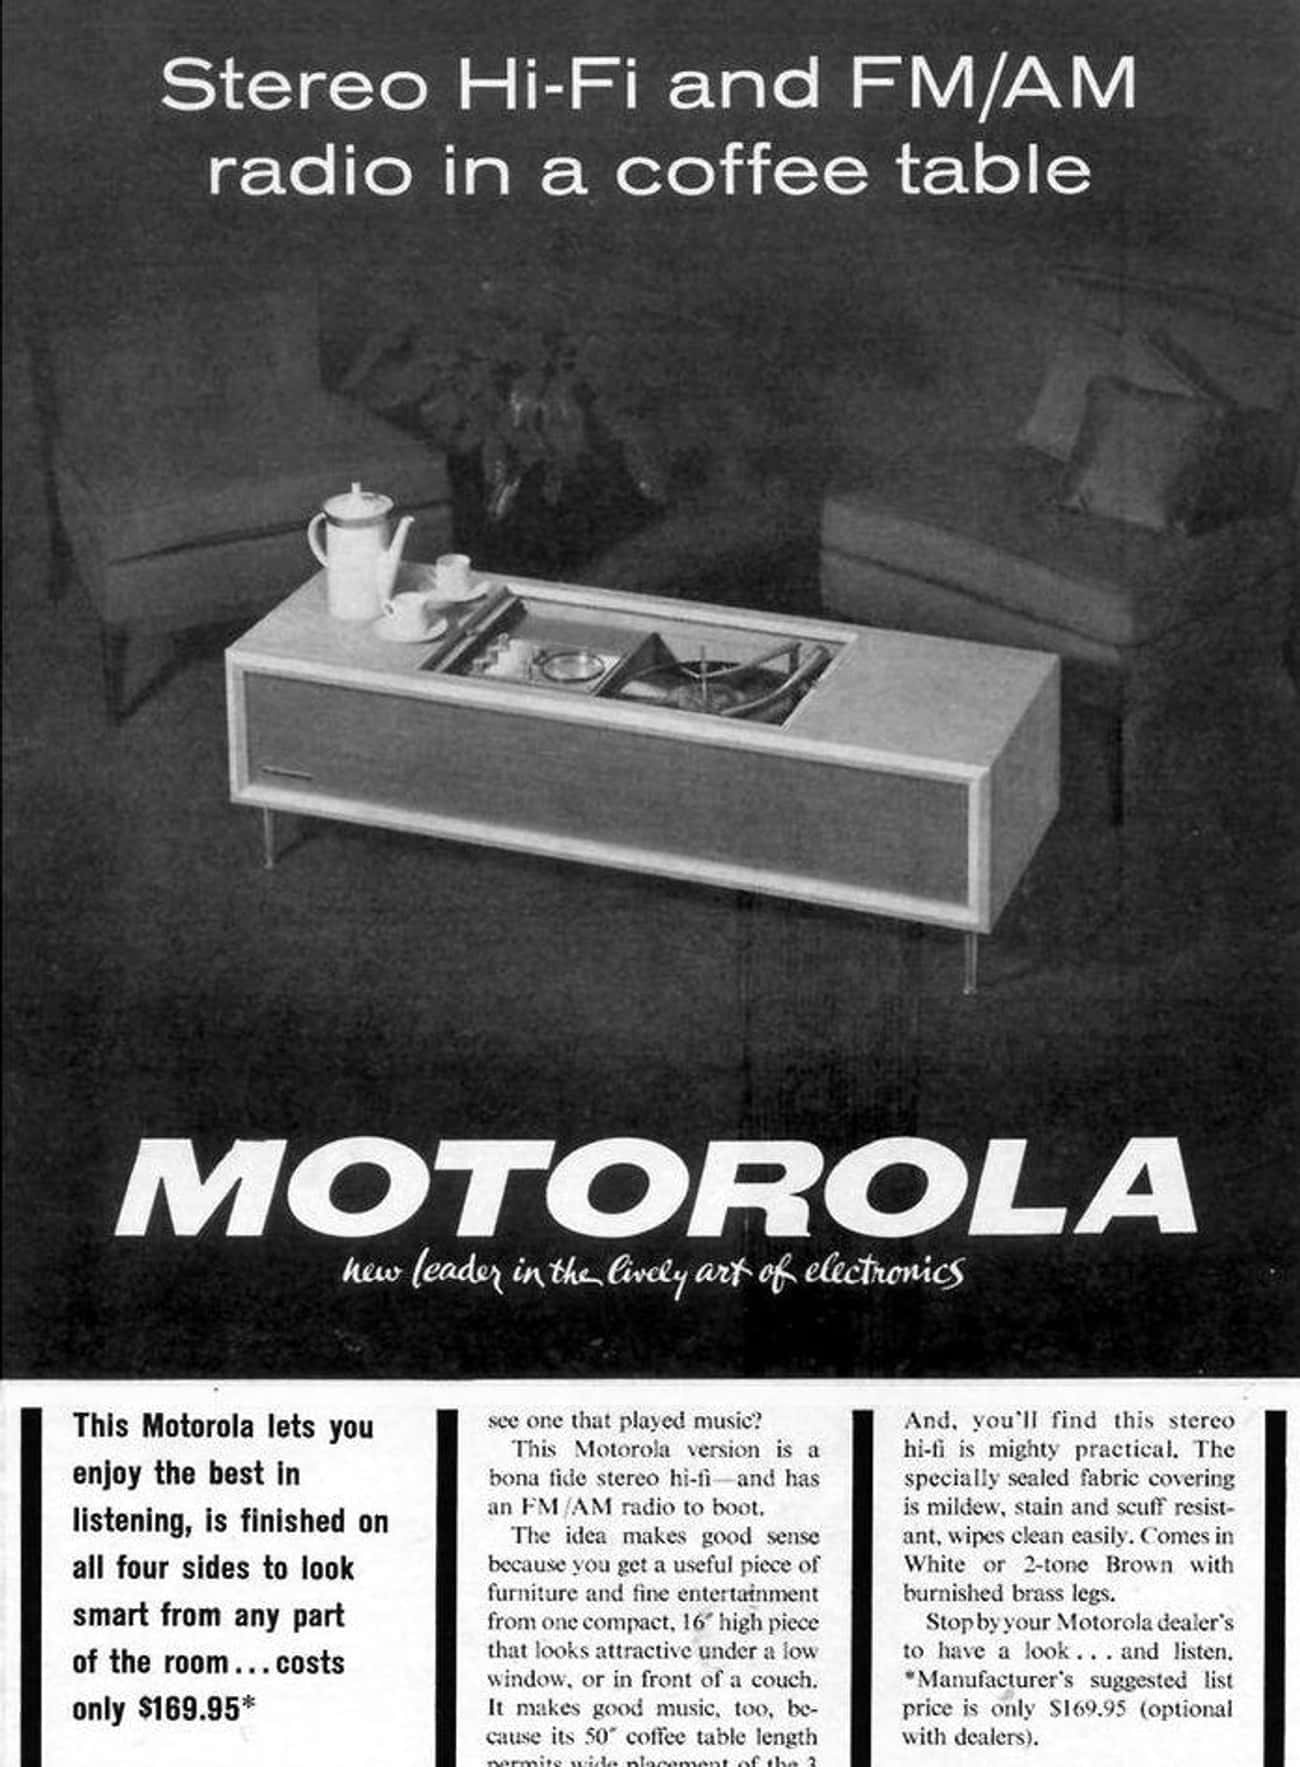 Motorola Stereo Hi-Fi Coffee Table: $169.95